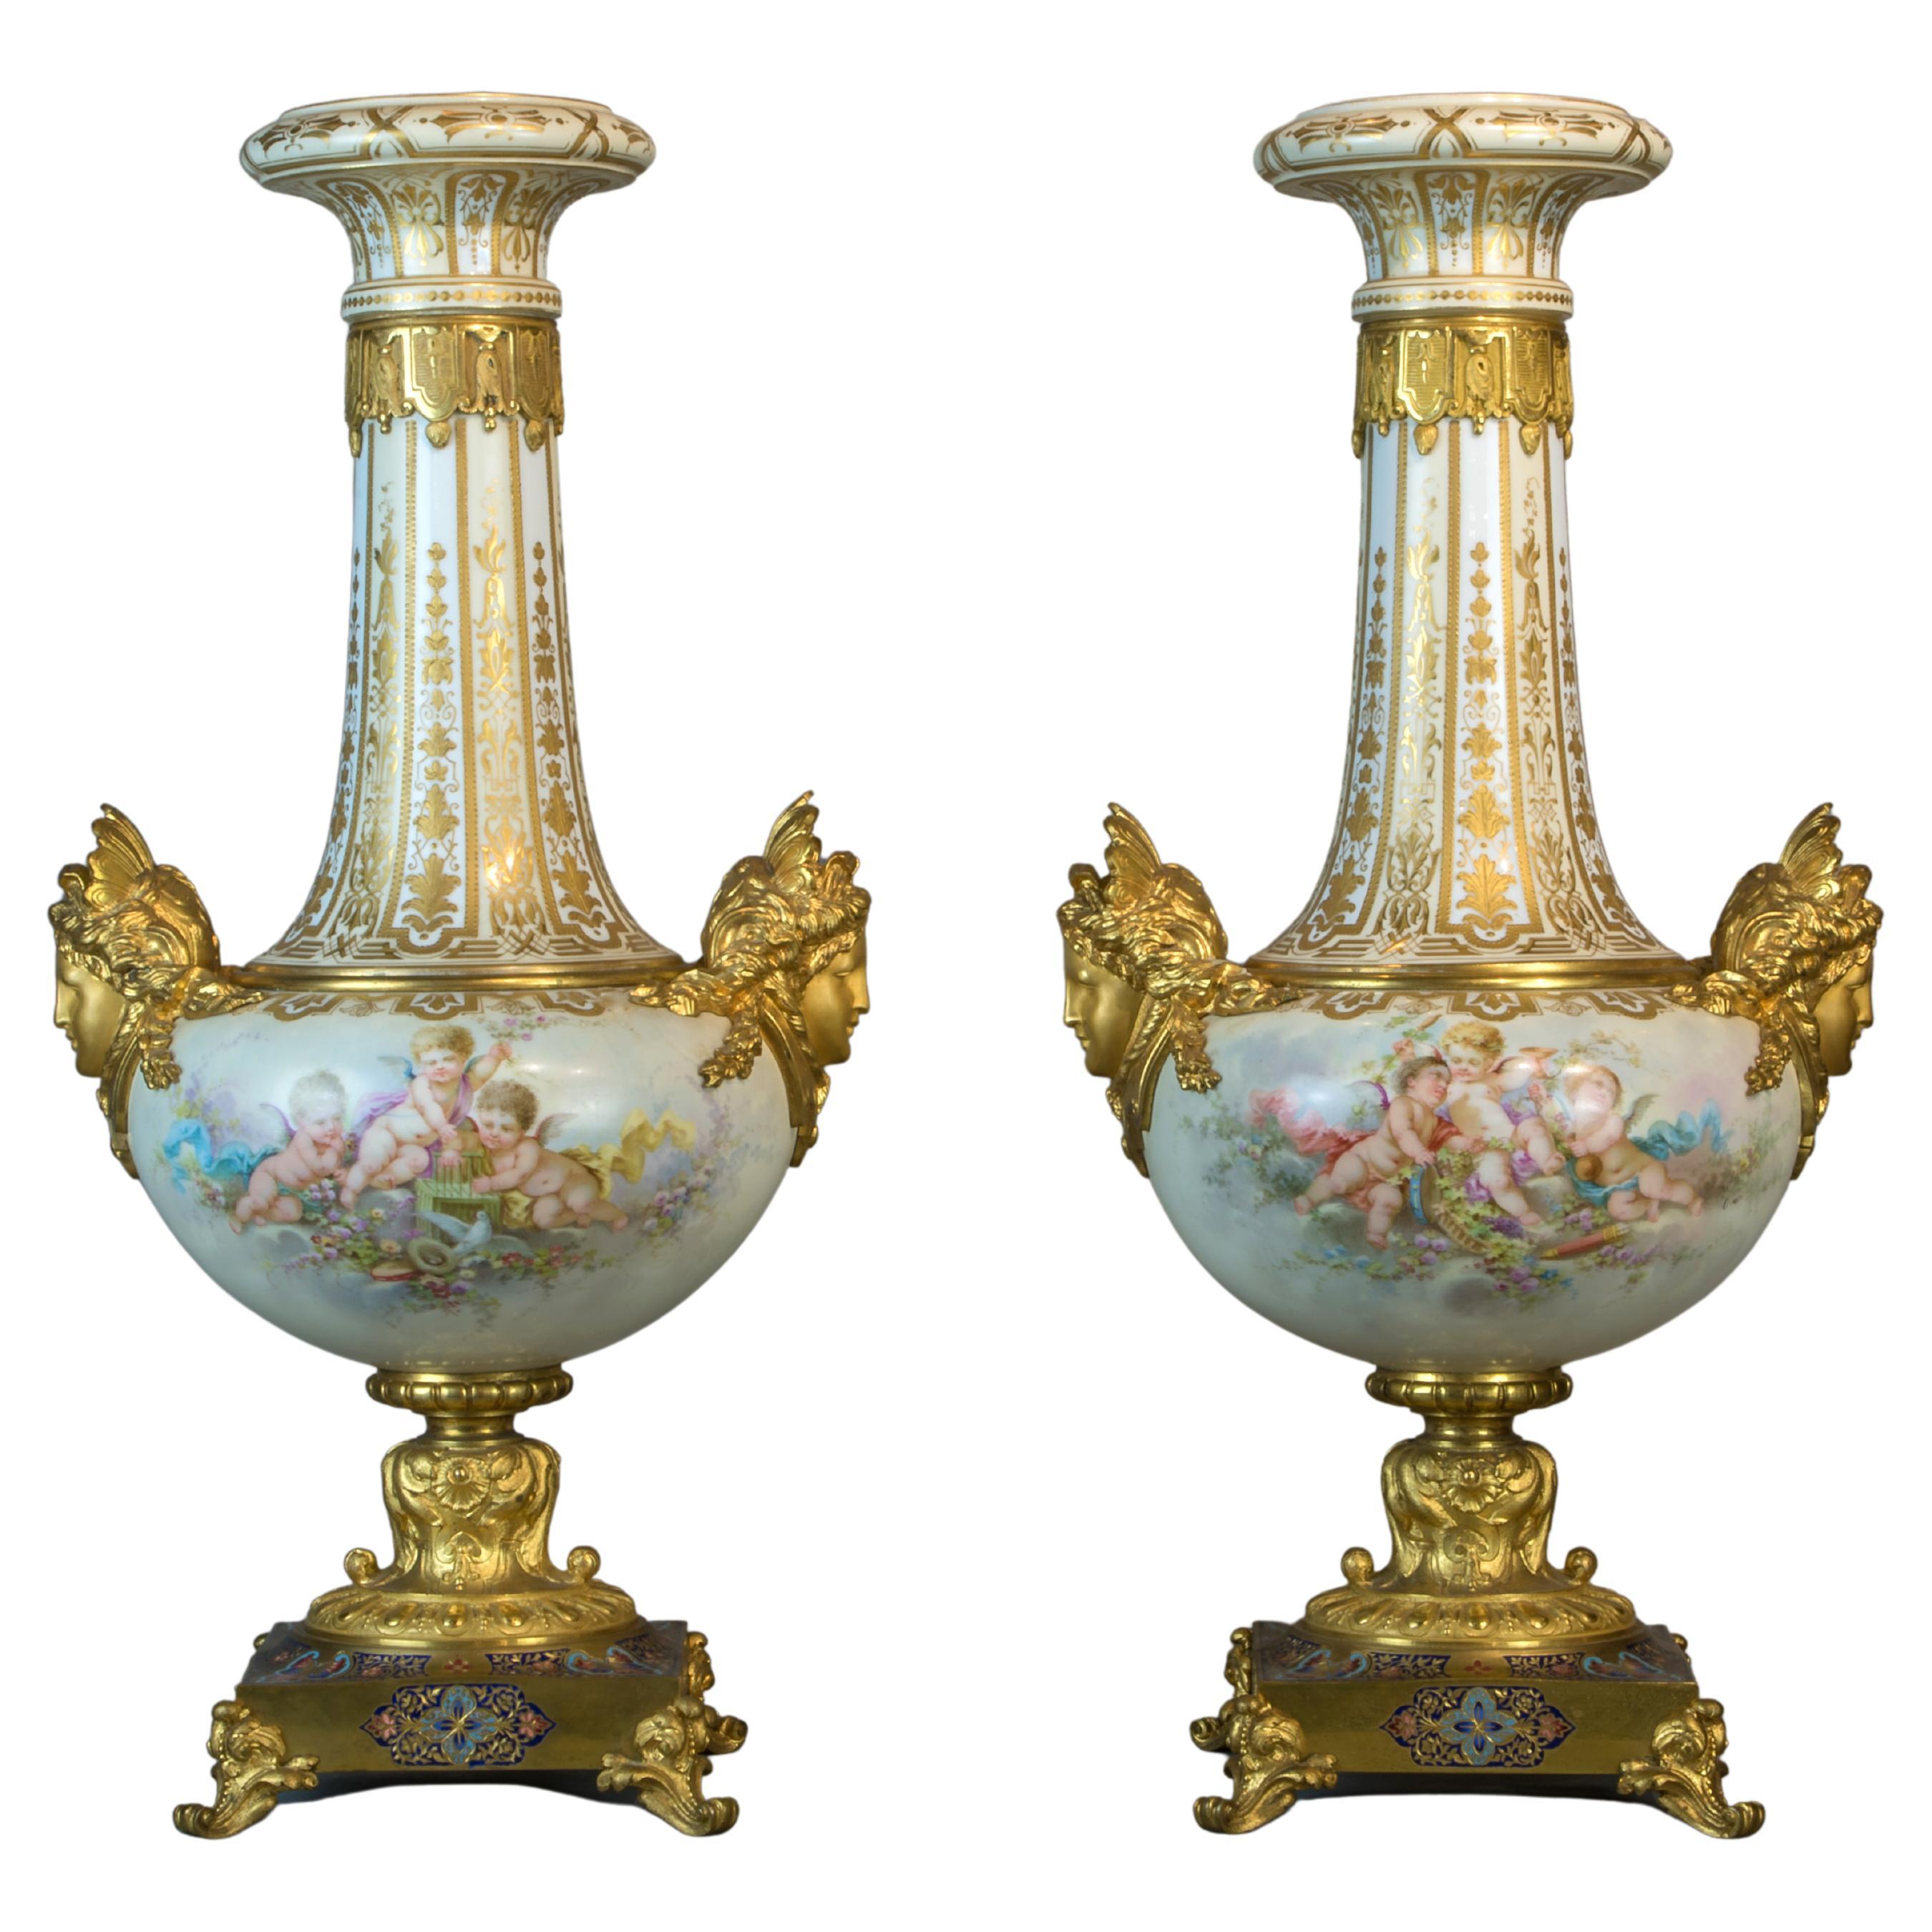 Pair of Ormolu-Mounted Sèvres-style Porcelain Champlevé Vases For Sale